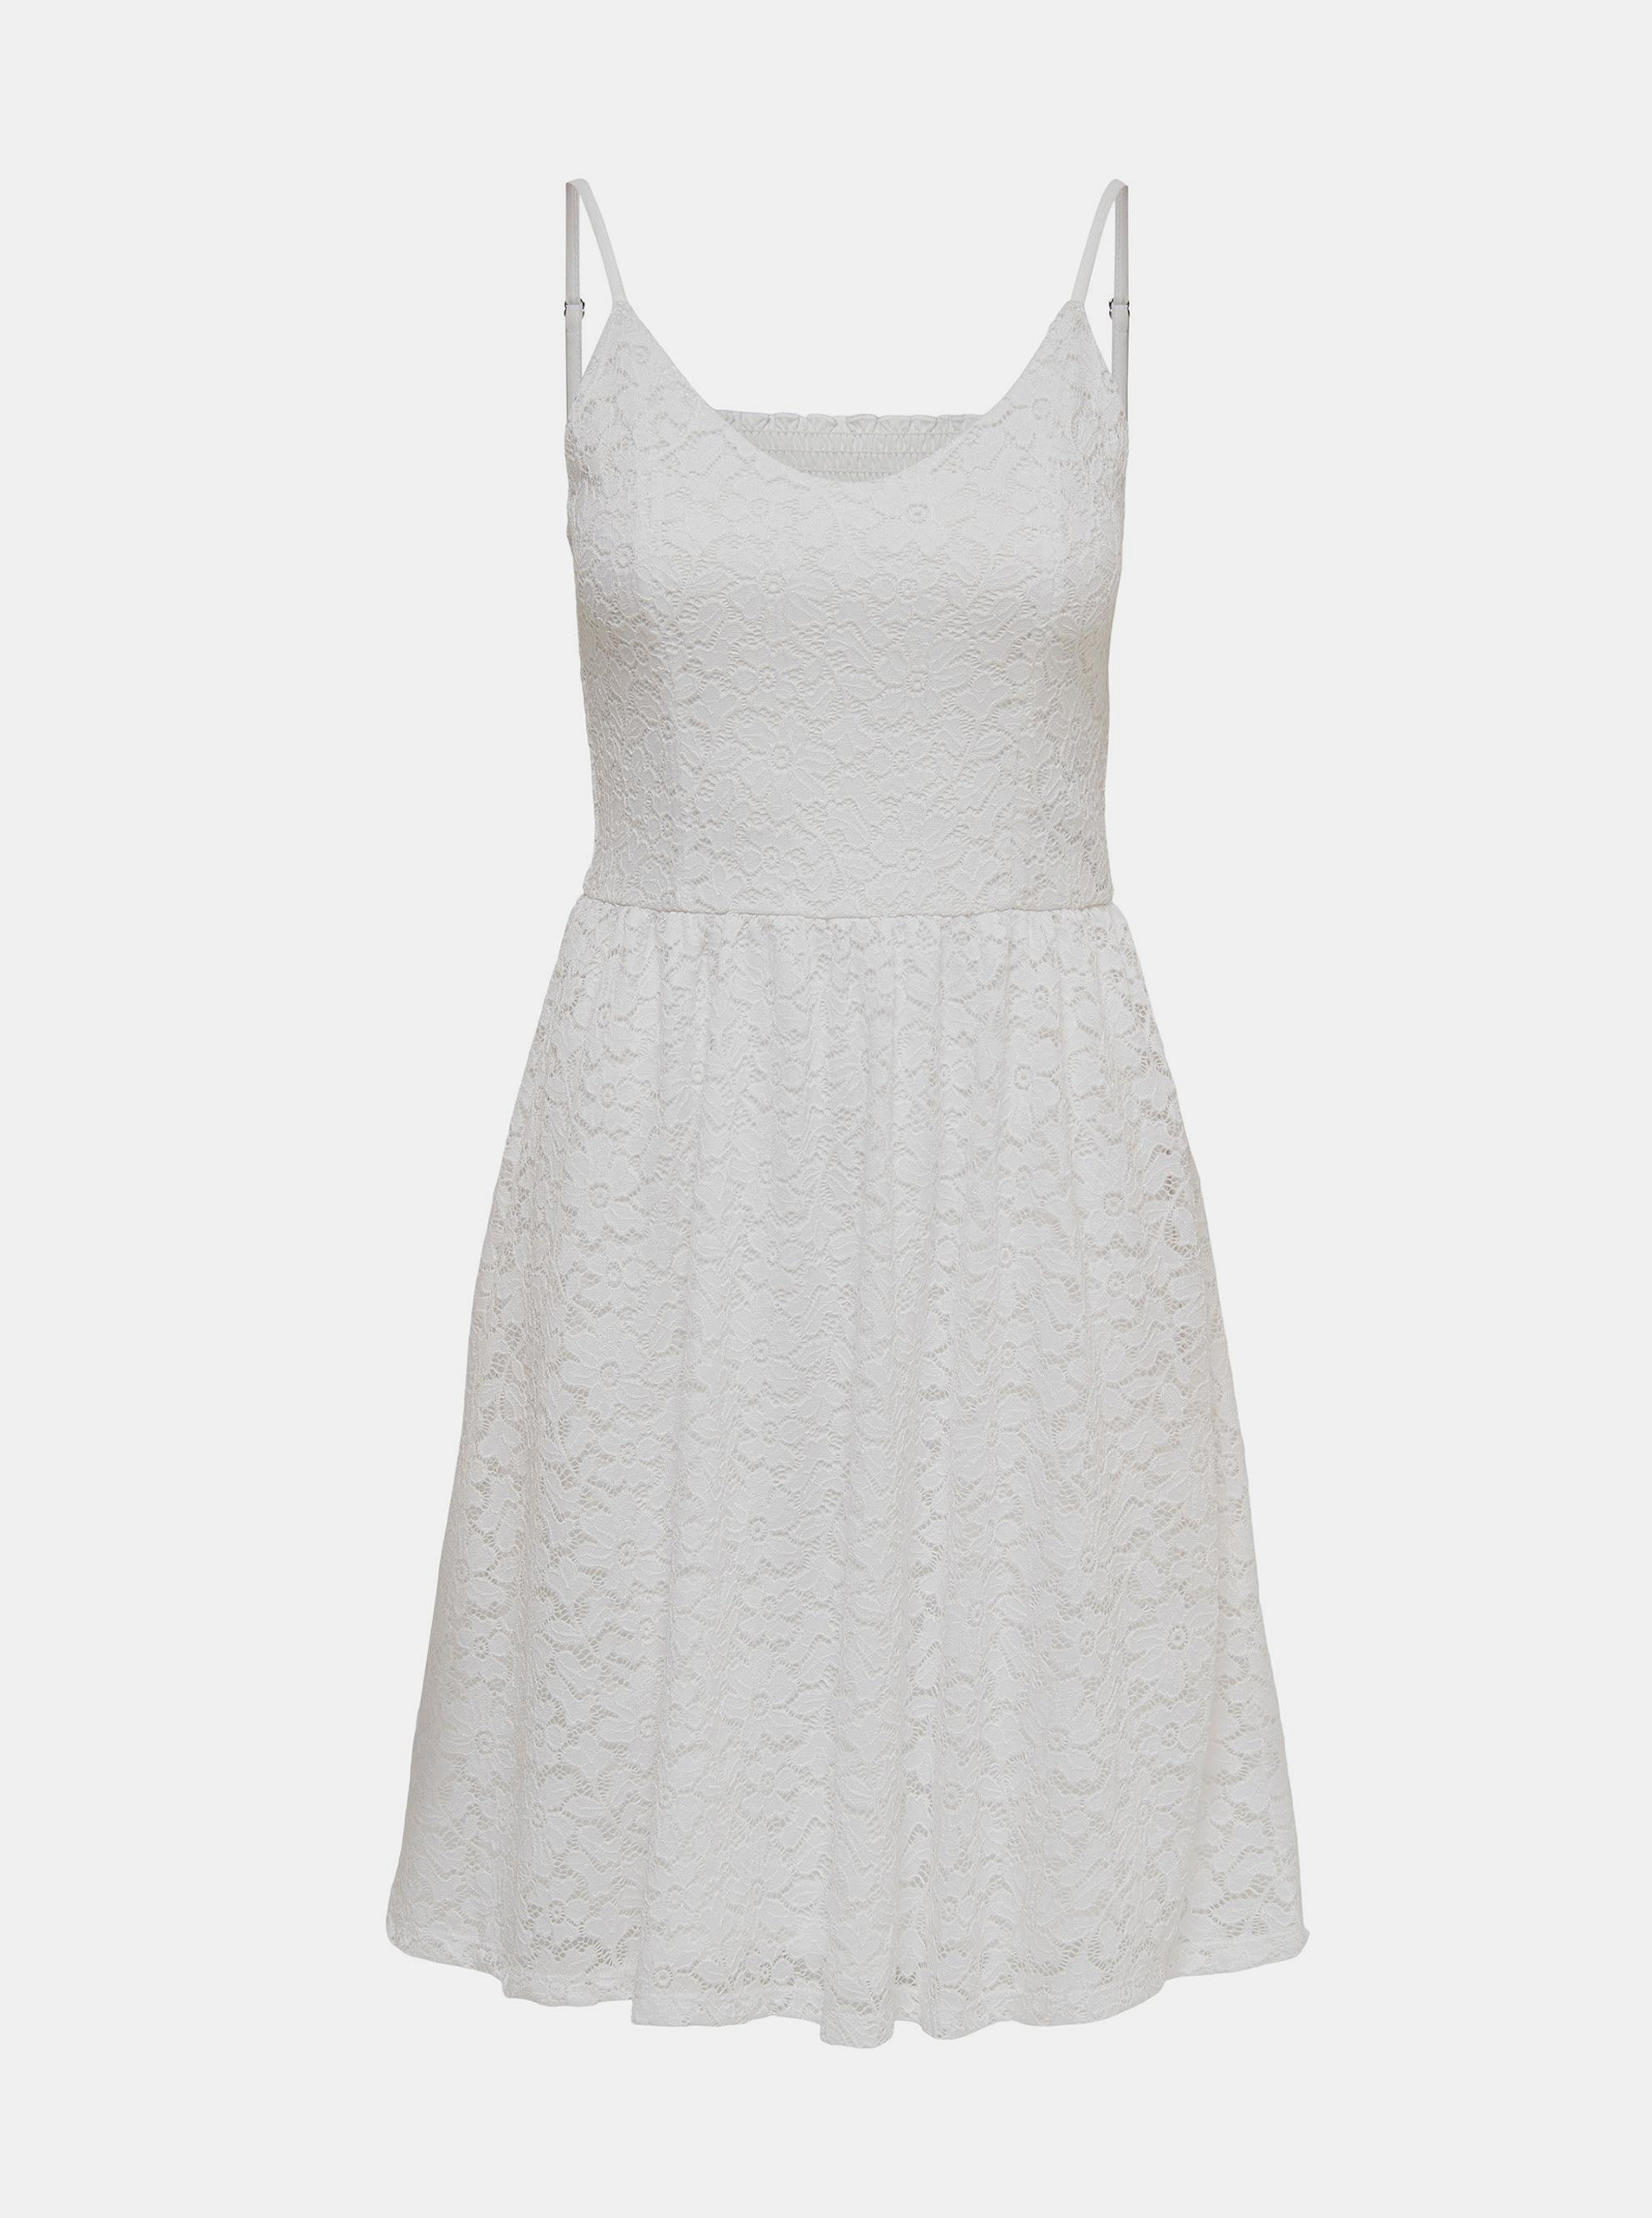 Bílé krajkované šaty ONLY New Alba